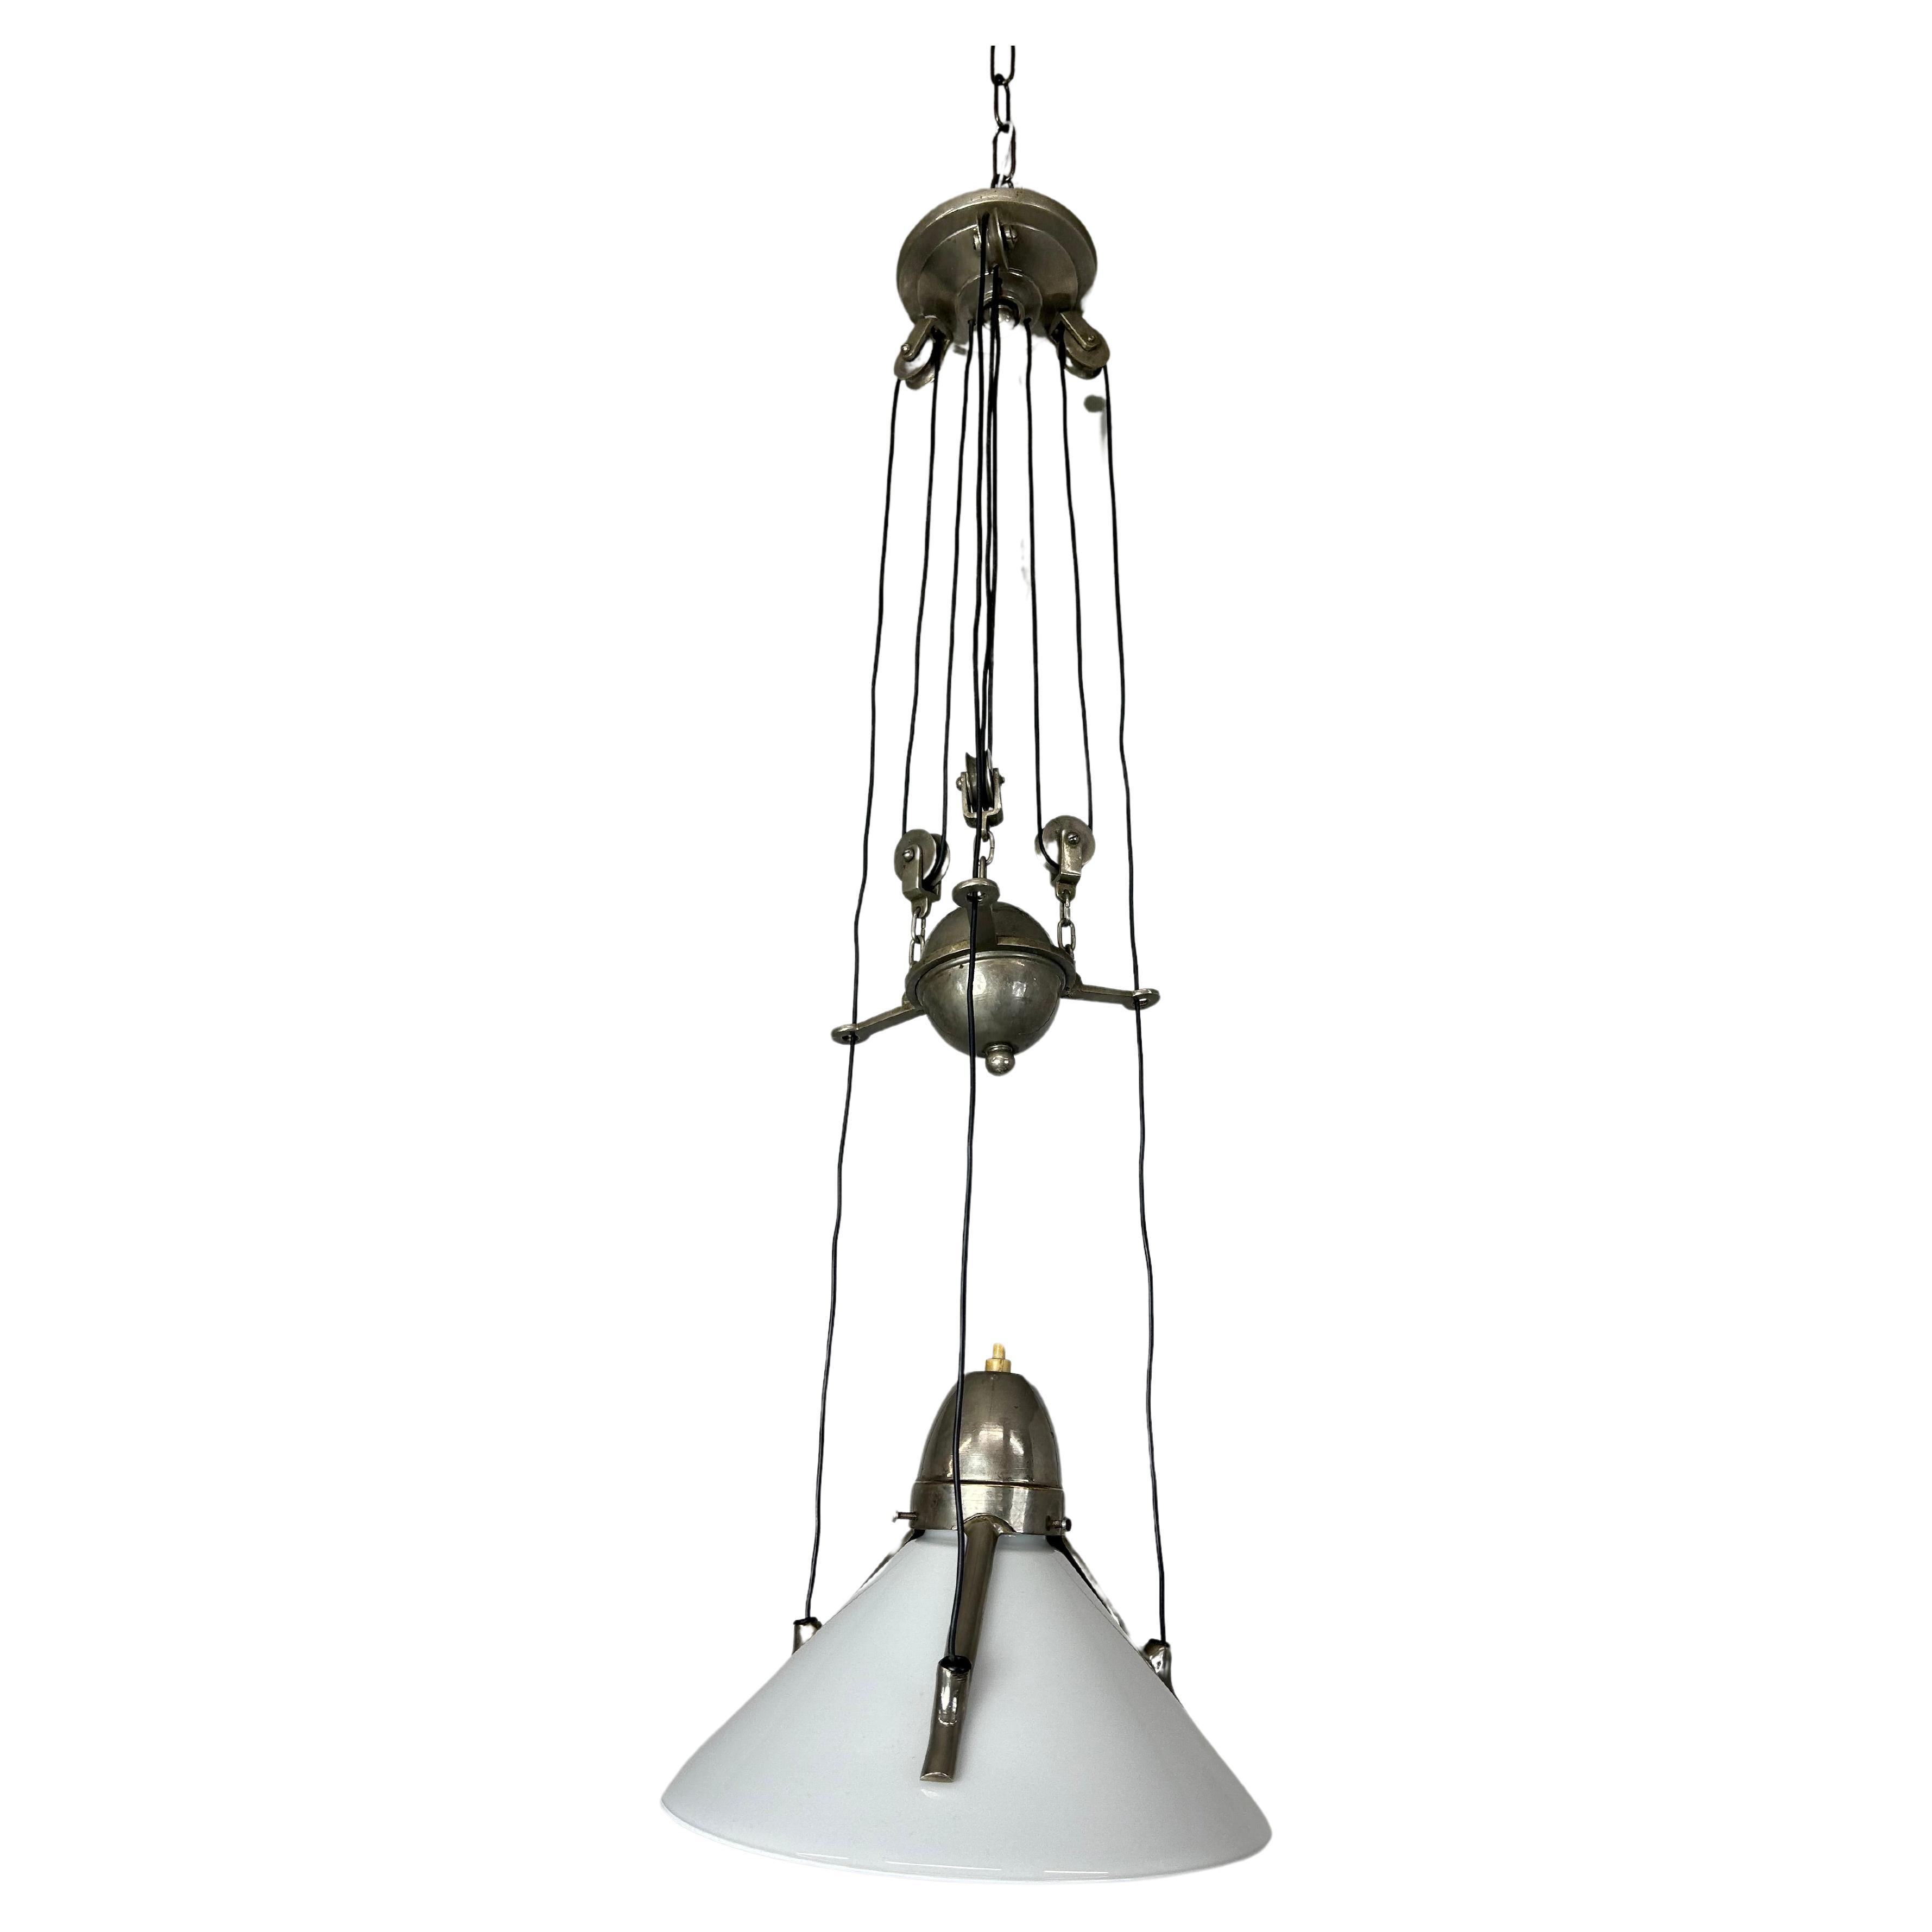 Art deco adjustable hanging lamp